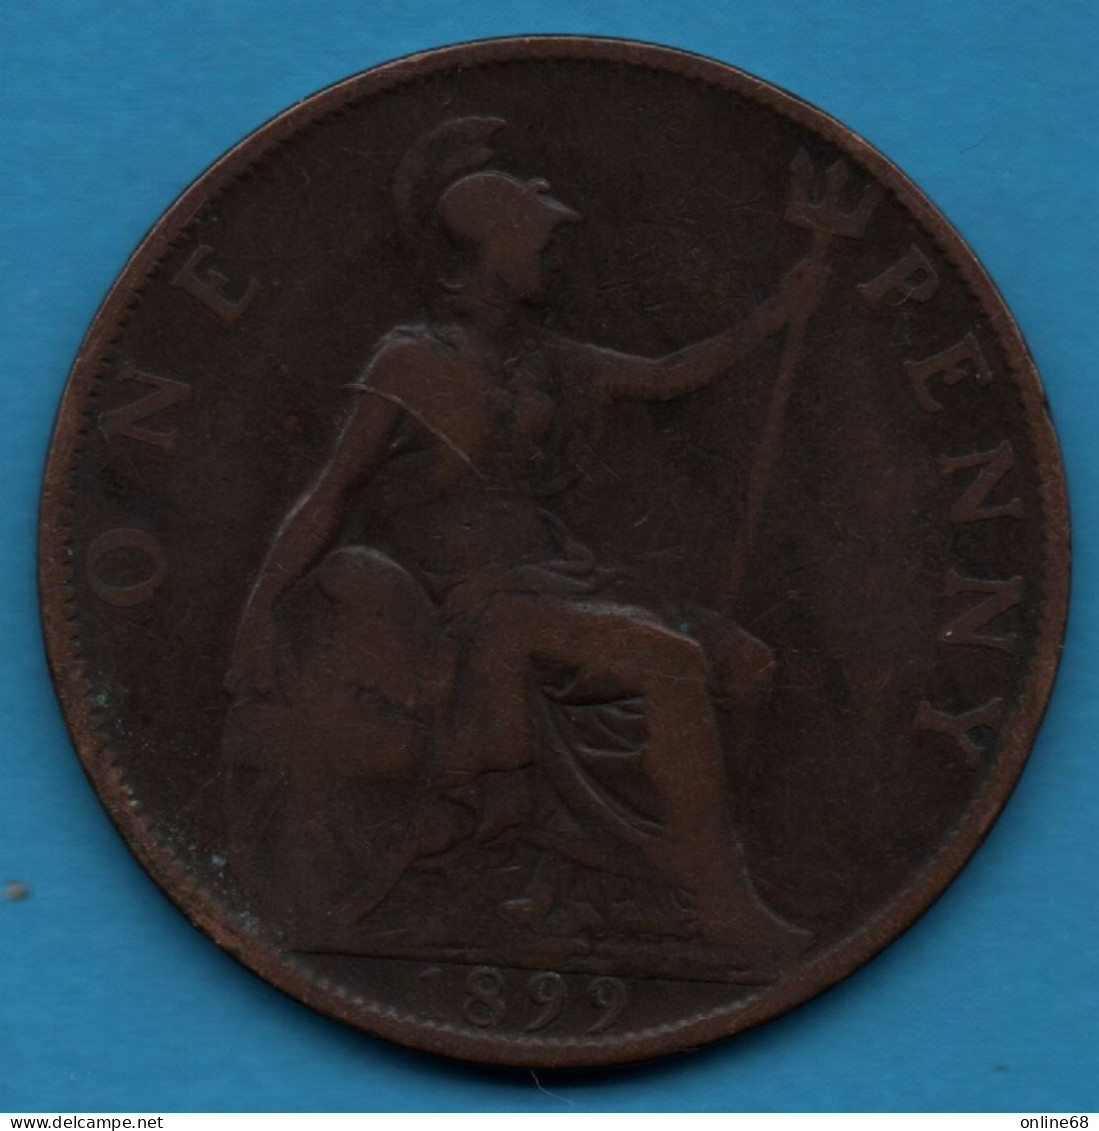 UK 1 PENNY 1899 KM# 790 VICTORIA - D. 1 Penny